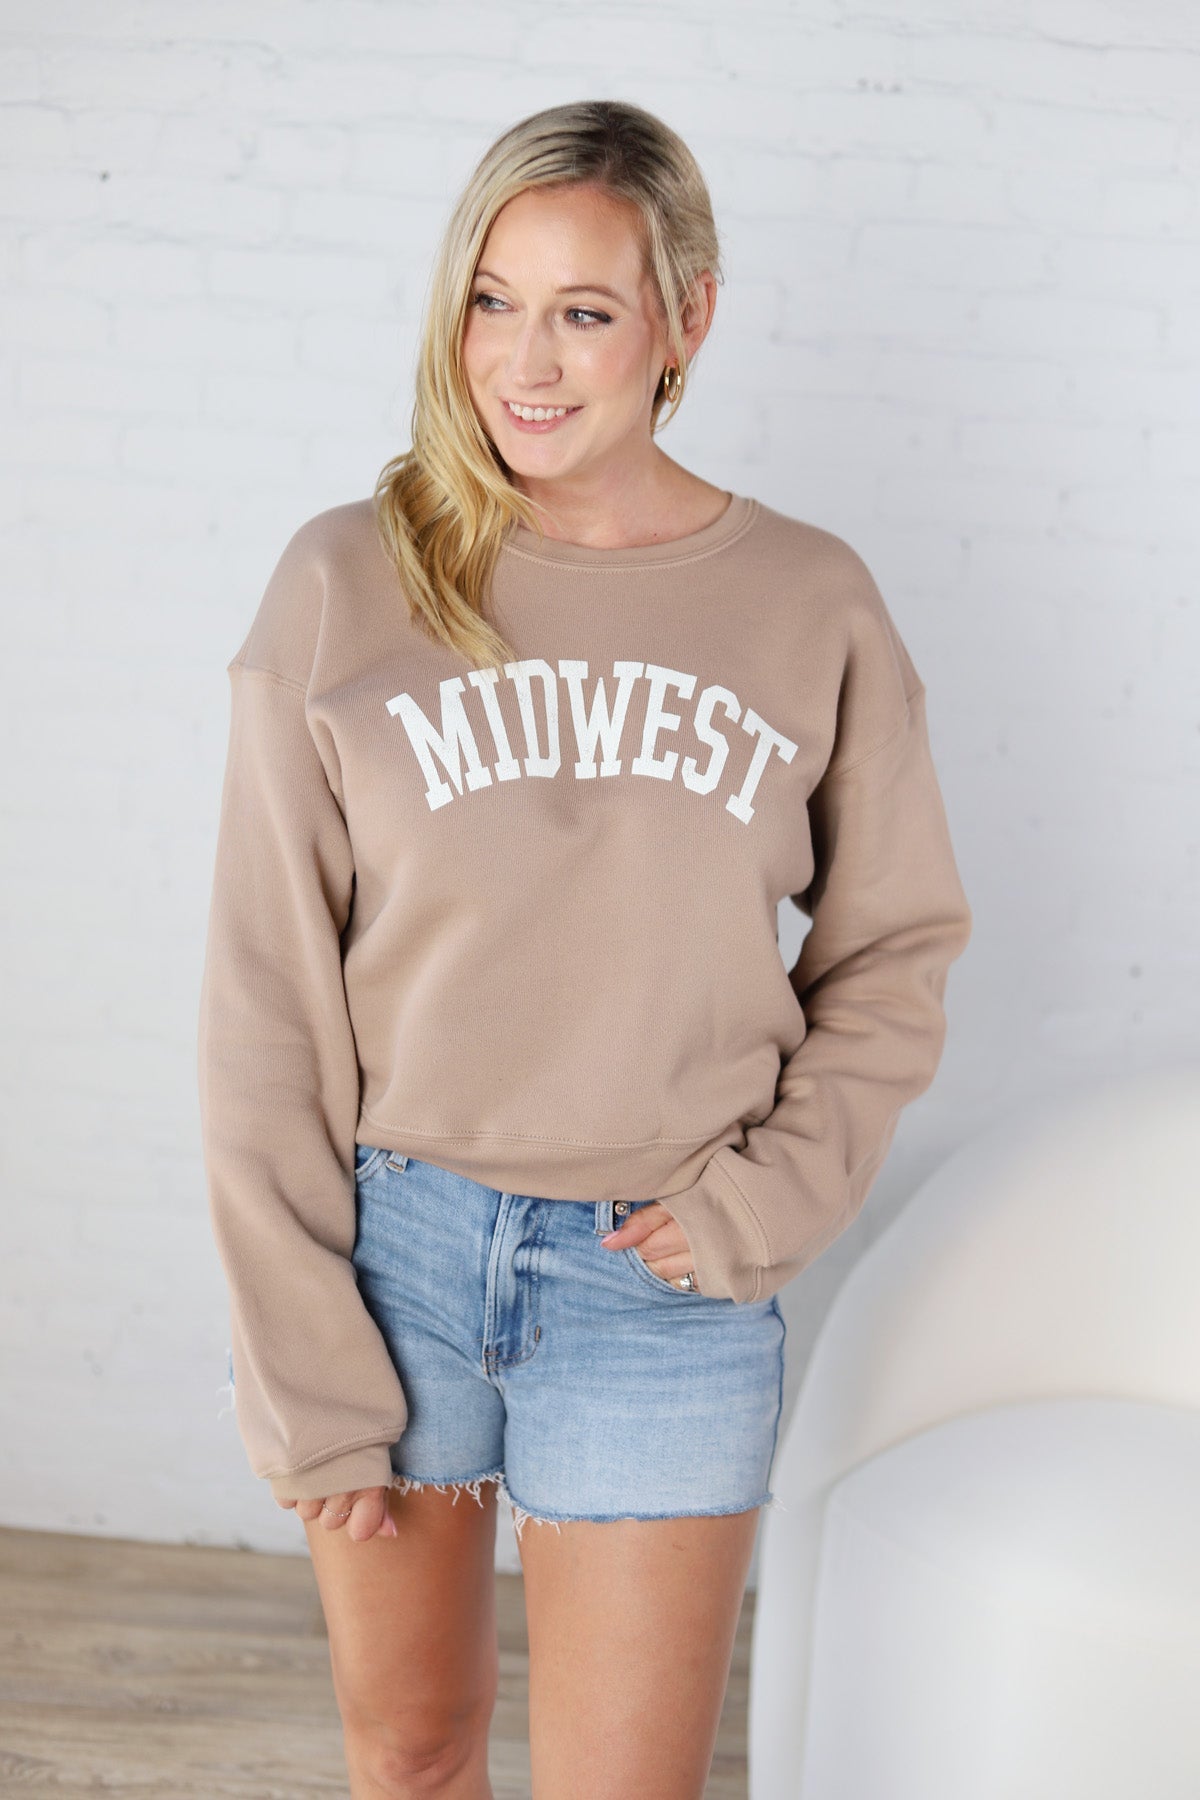 Midwest Graphic Sweatshirt - Tan